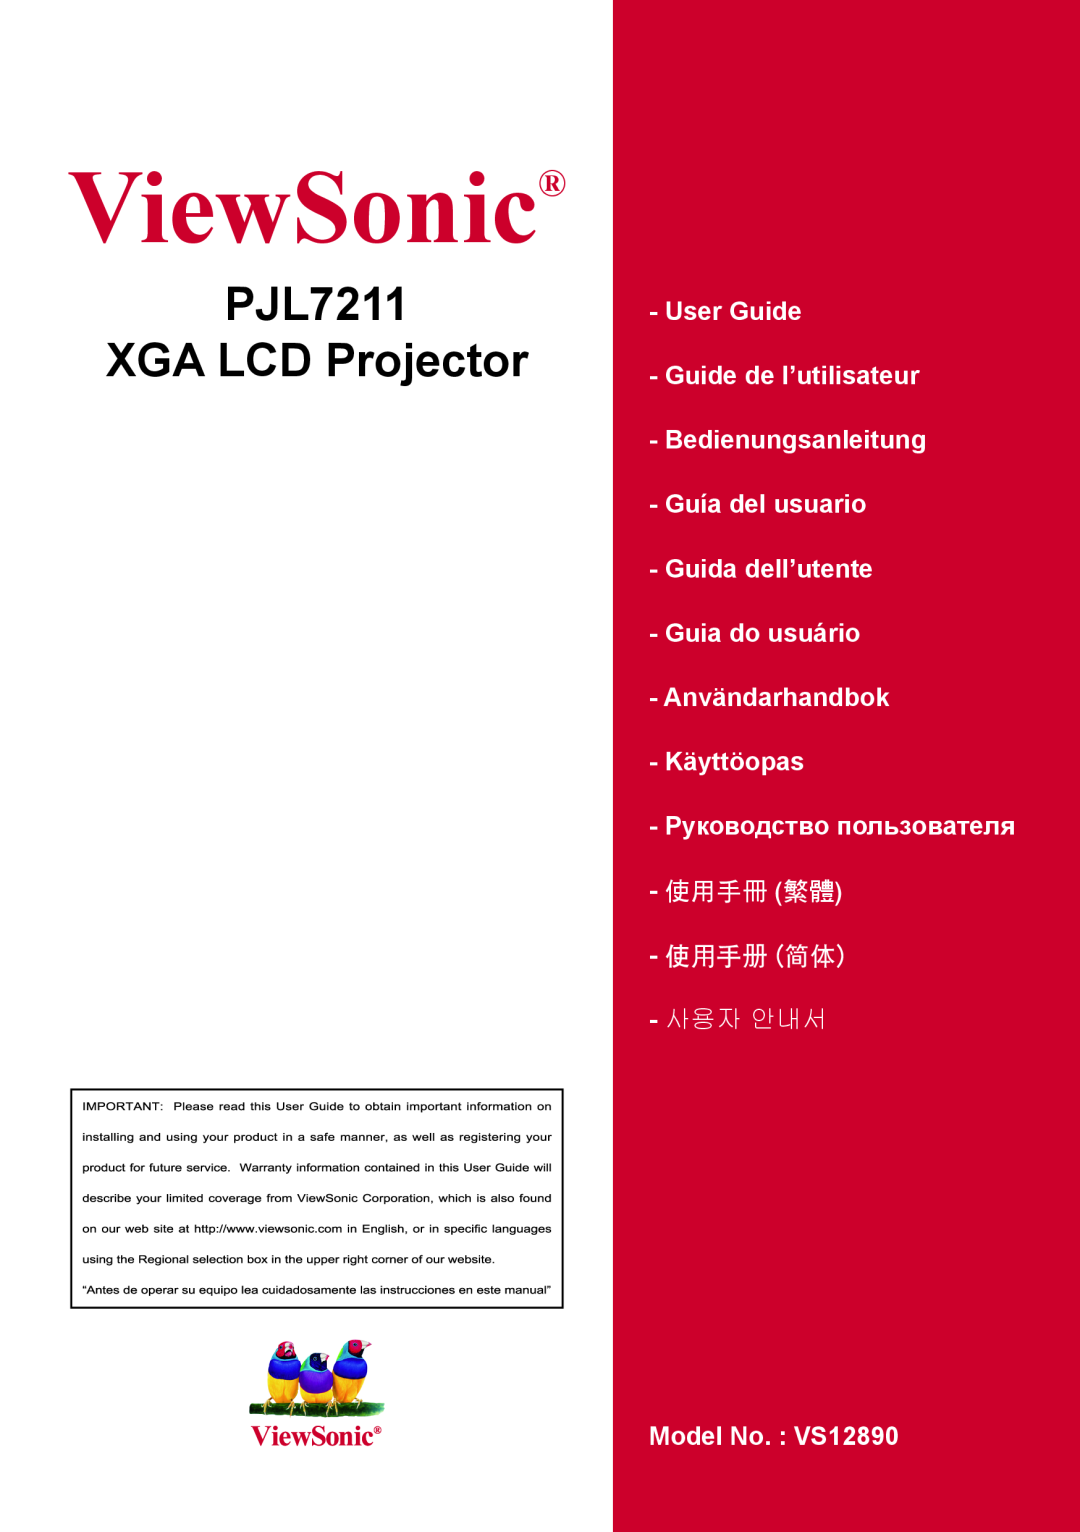 ViewSonic manual PJL7211 XGA LCD Projector, ViewSonic, User Guide Guide de l’utilisateur, 使用手冊 繁體 使用手冊 簡體, 사용자 안내서 